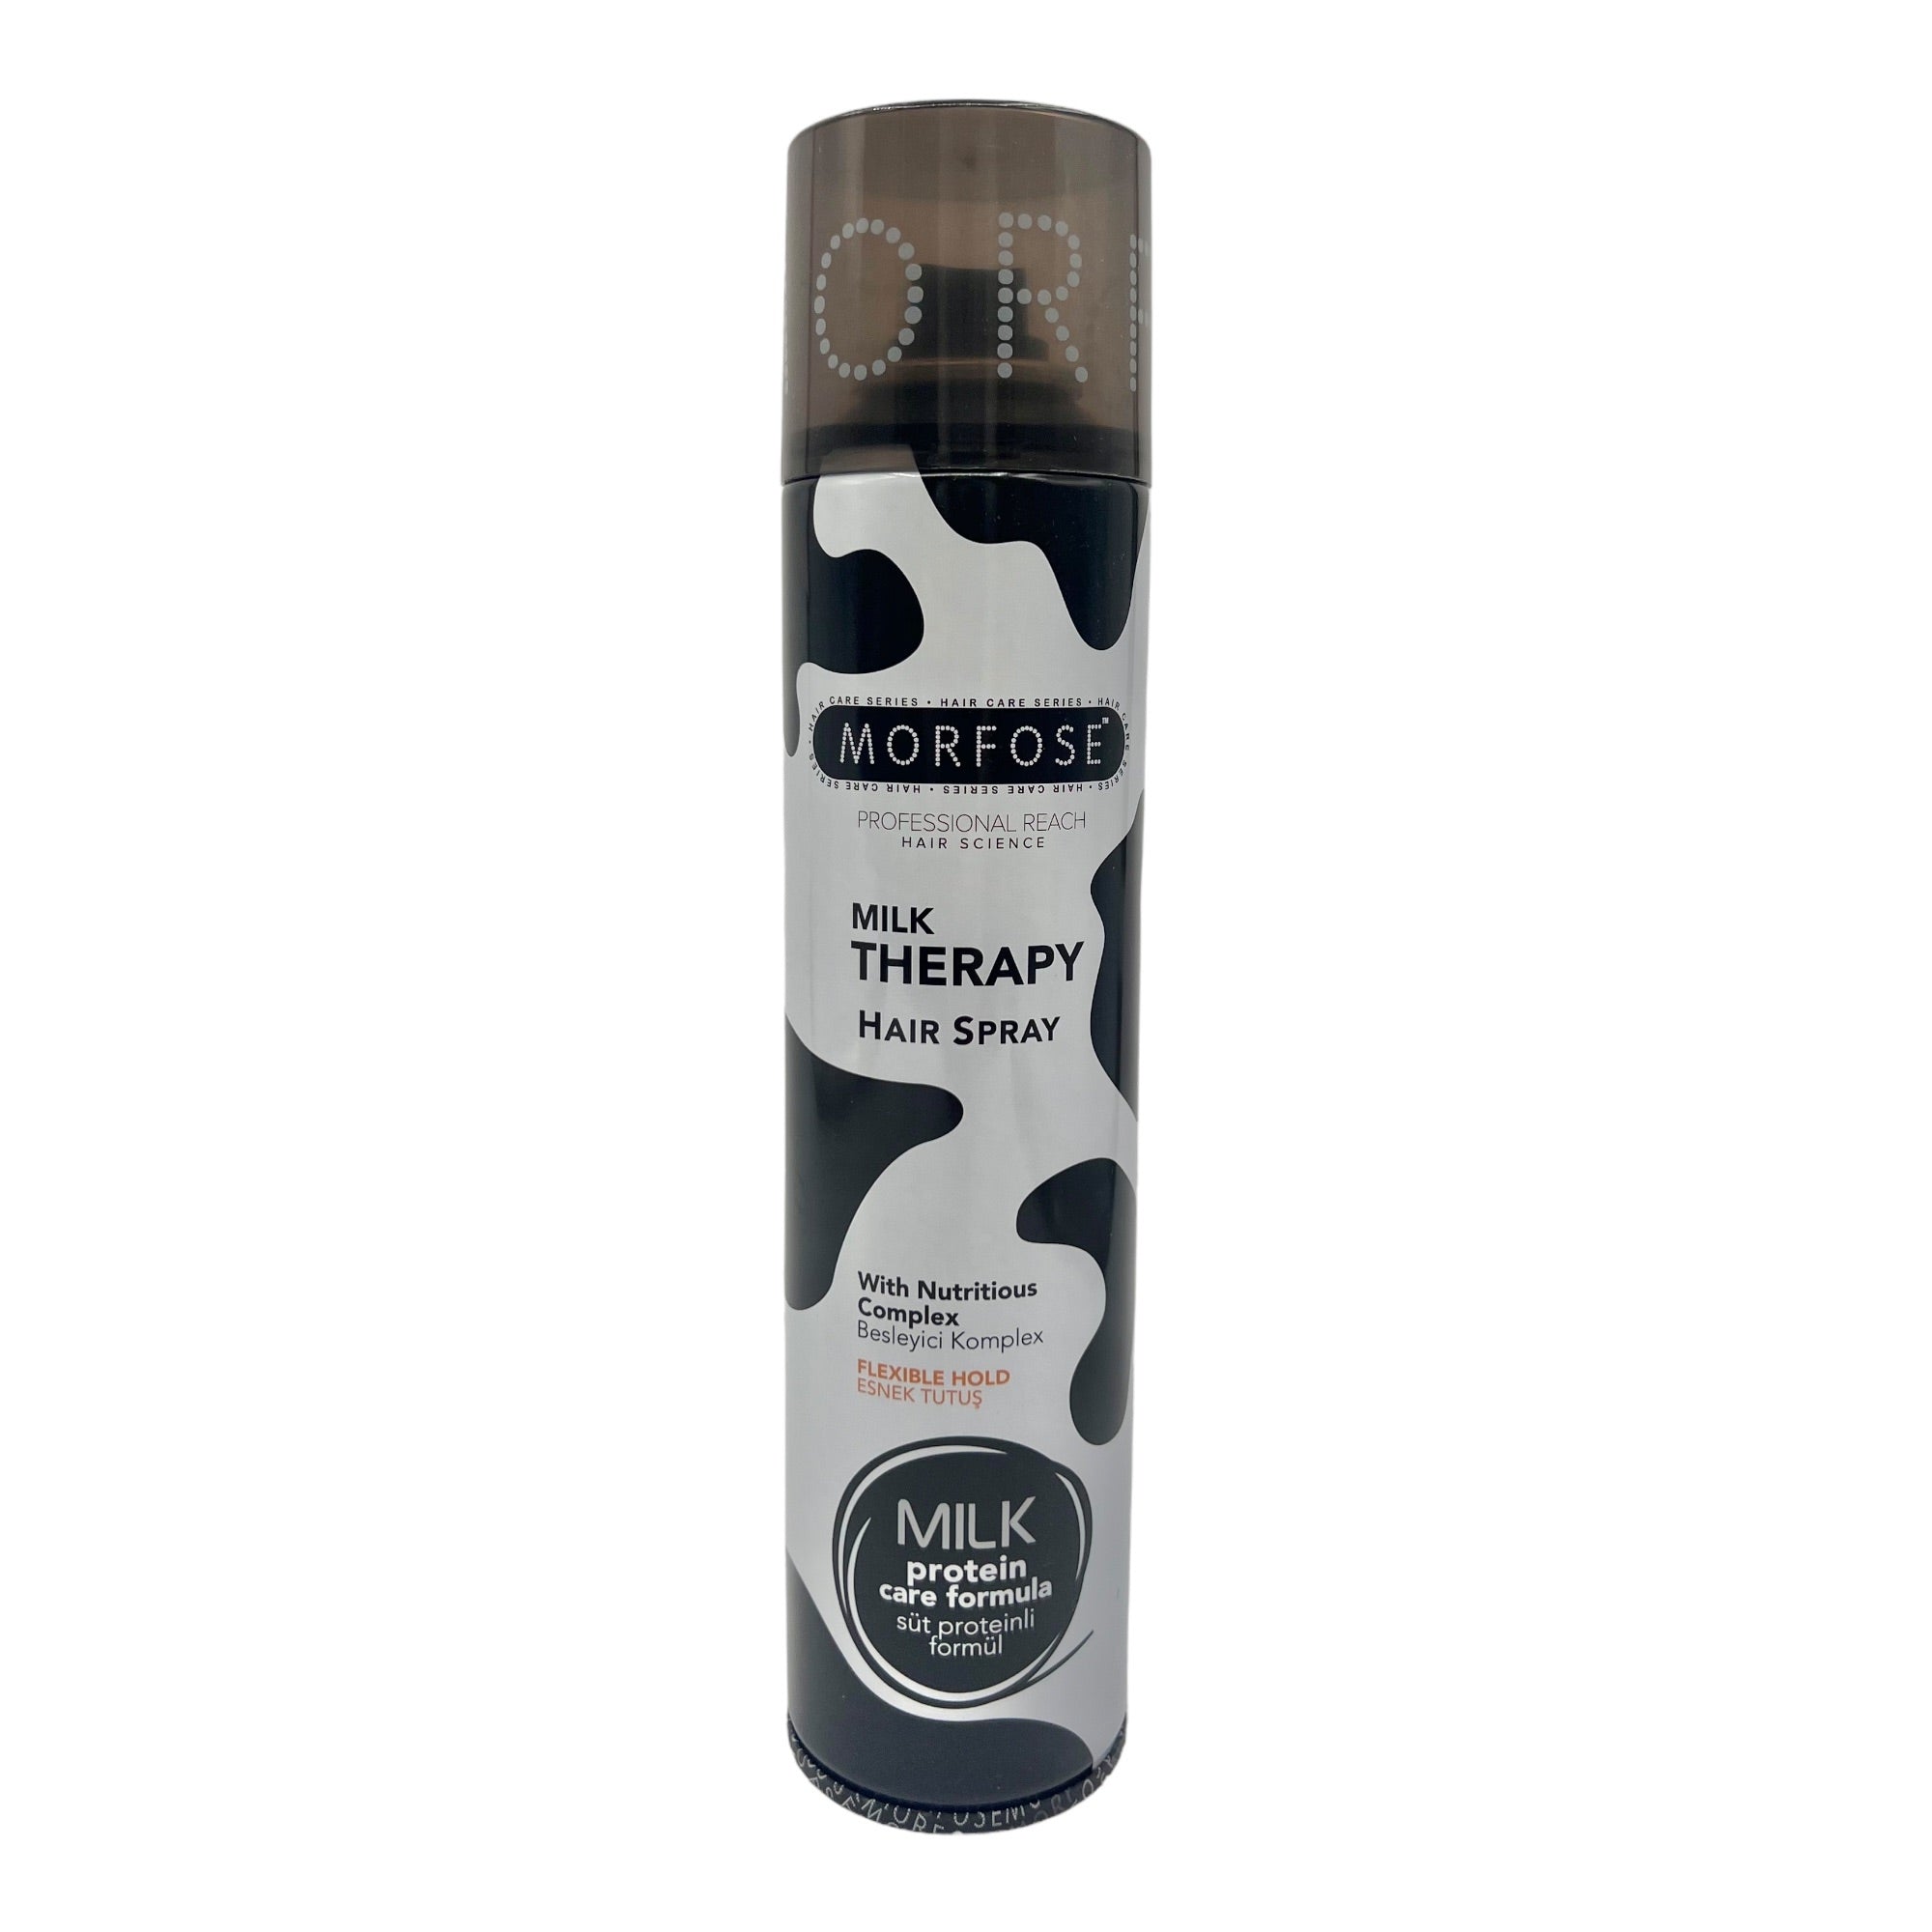 Morfose - Milk Therapy Hair Spray 300ml